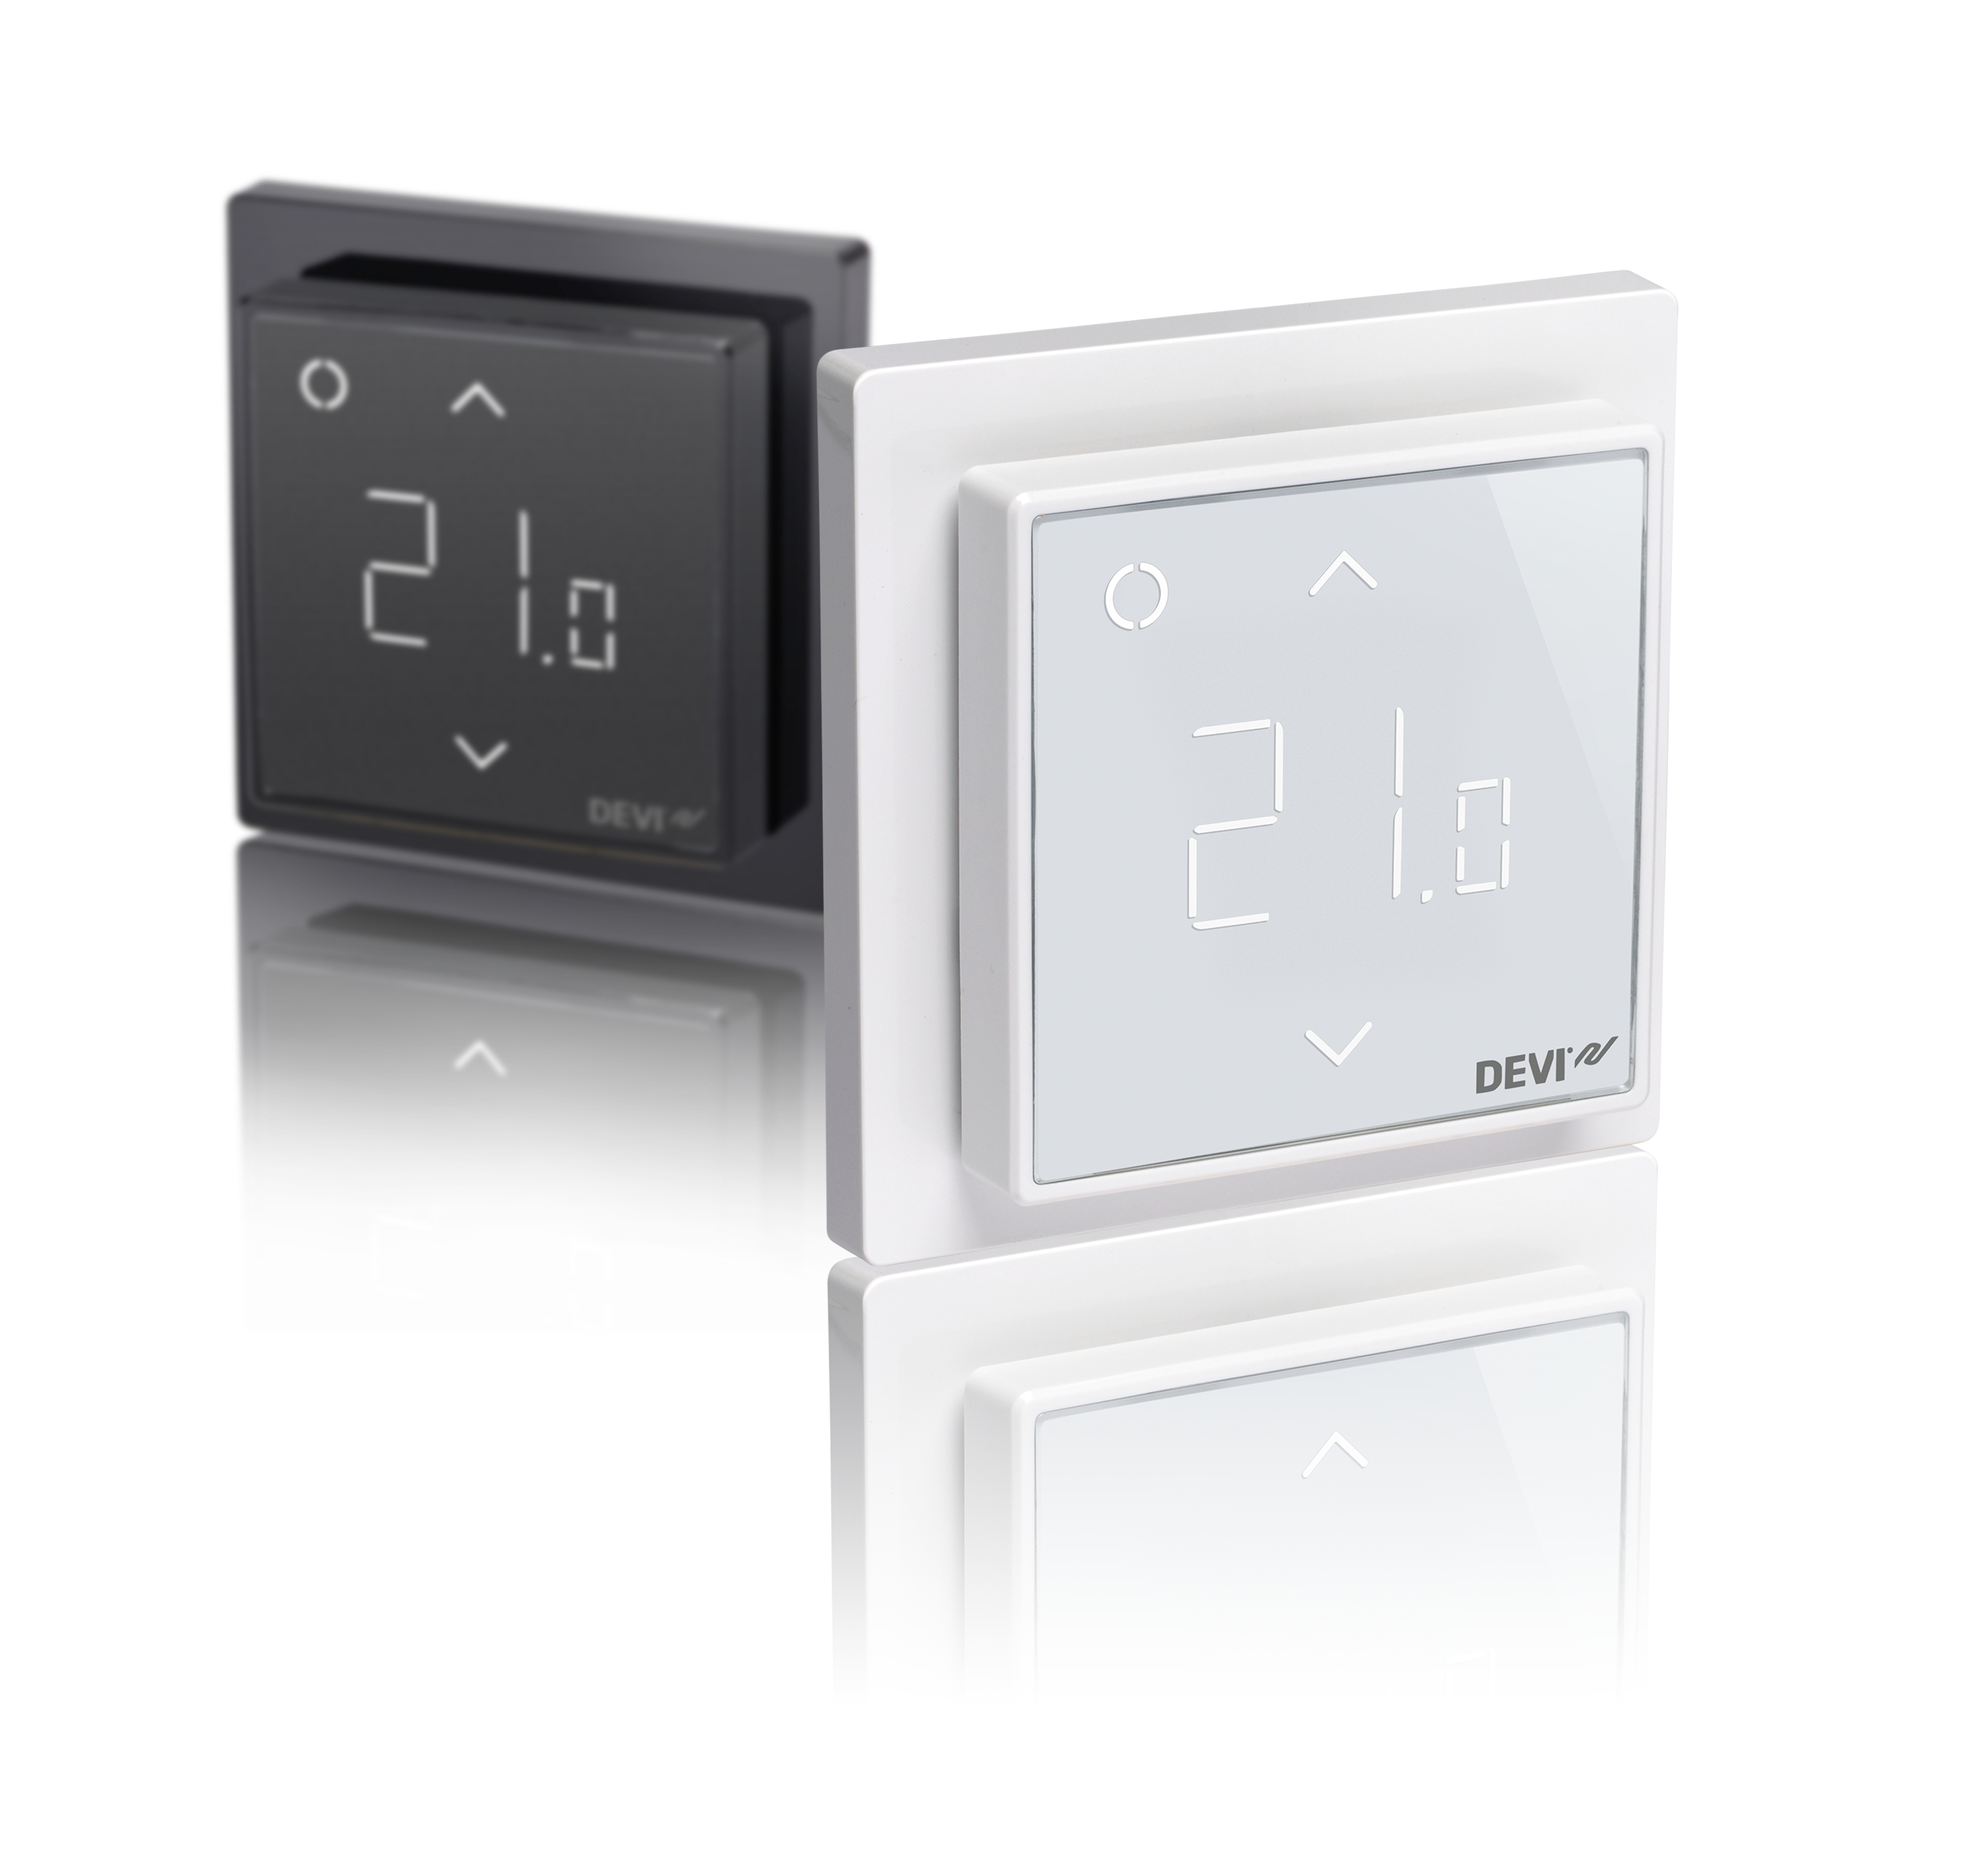 DEVIreg Smart 2x thermostats White Black Flat